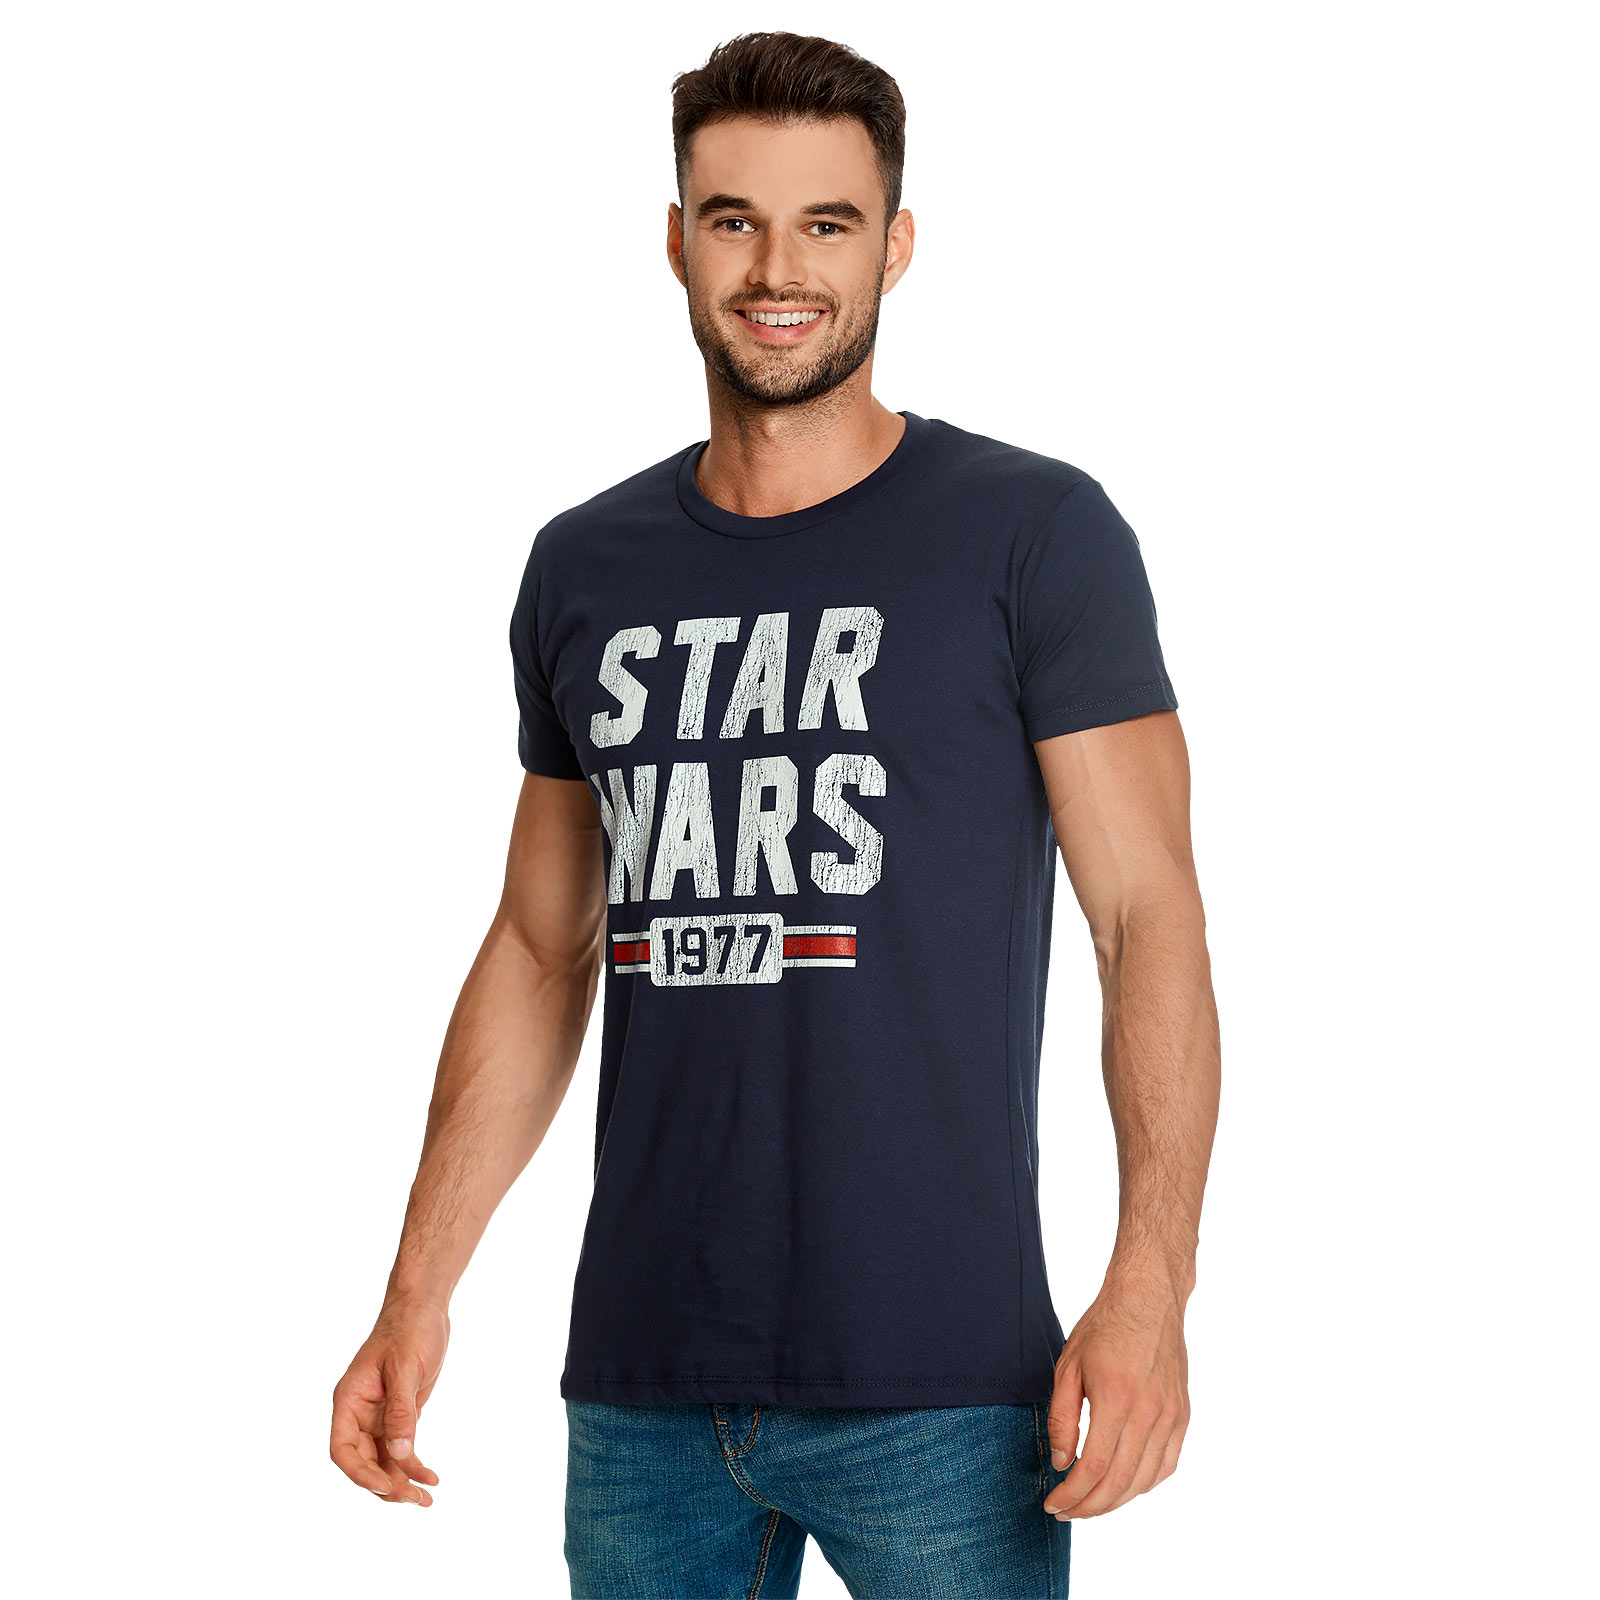 Star Wars of 1977 Distressed T-Shirt blue